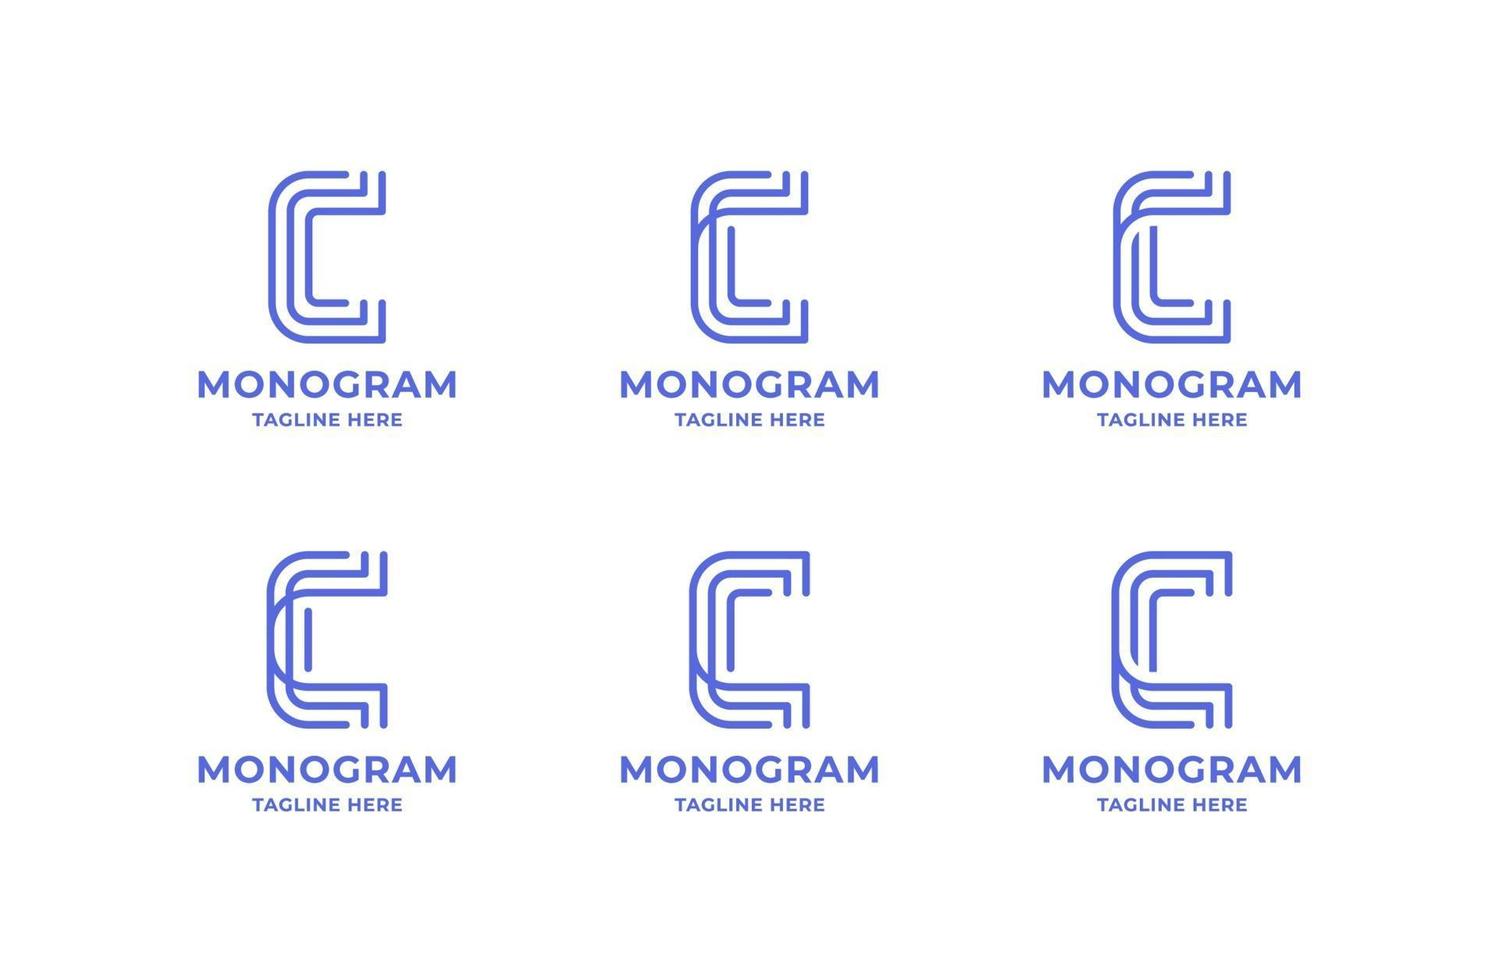 Simple and Minimalist Line Art Letter C Logo Set vector